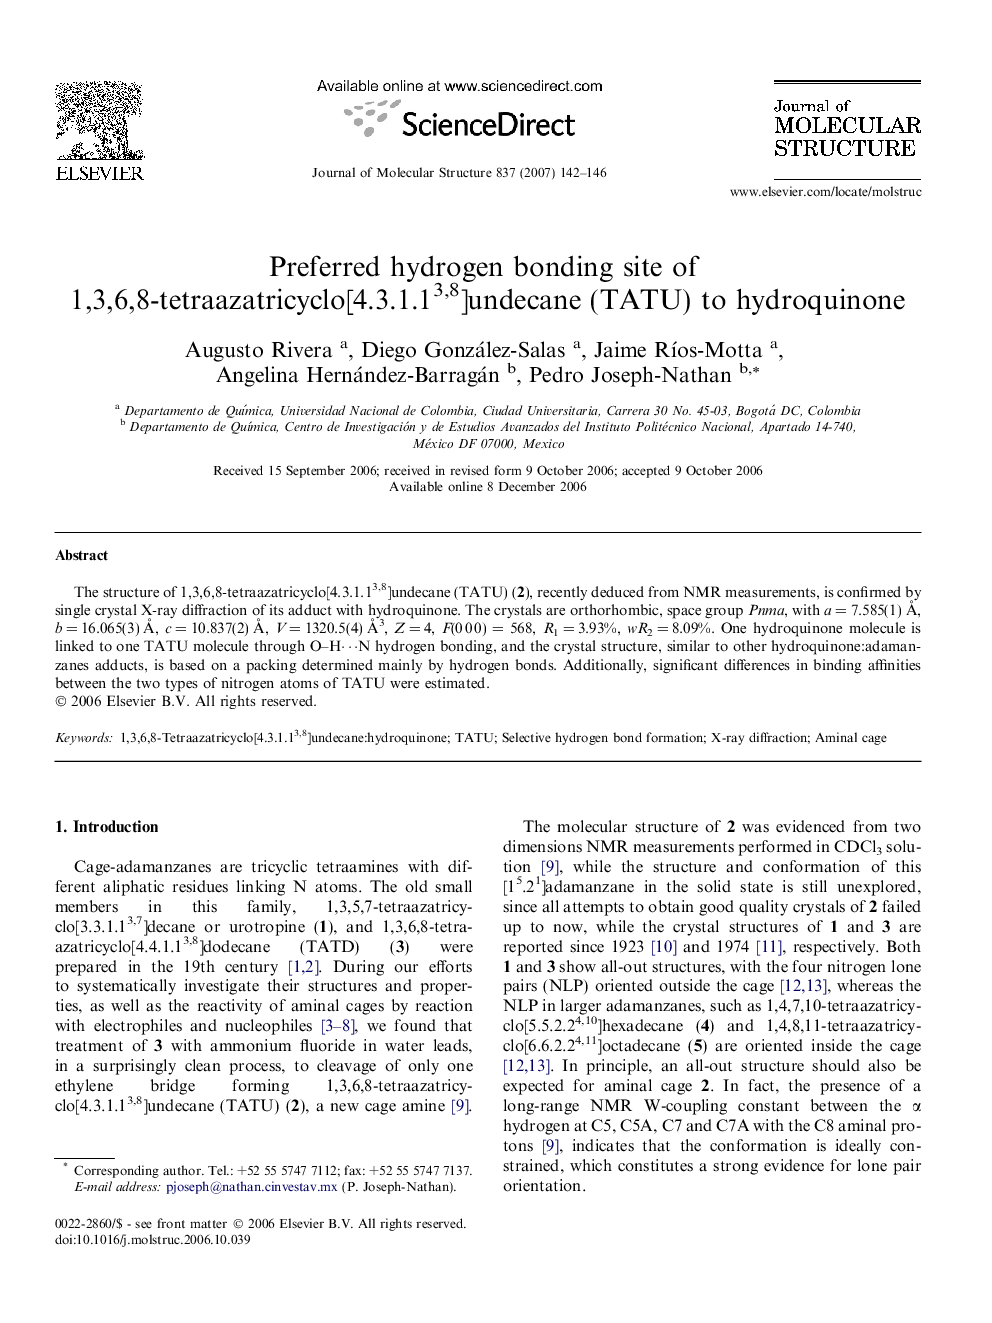 Preferred hydrogen bonding site of 1,3,6,8-tetraazatricyclo[4.3.1.13,8]undecane (TATU) to hydroquinone